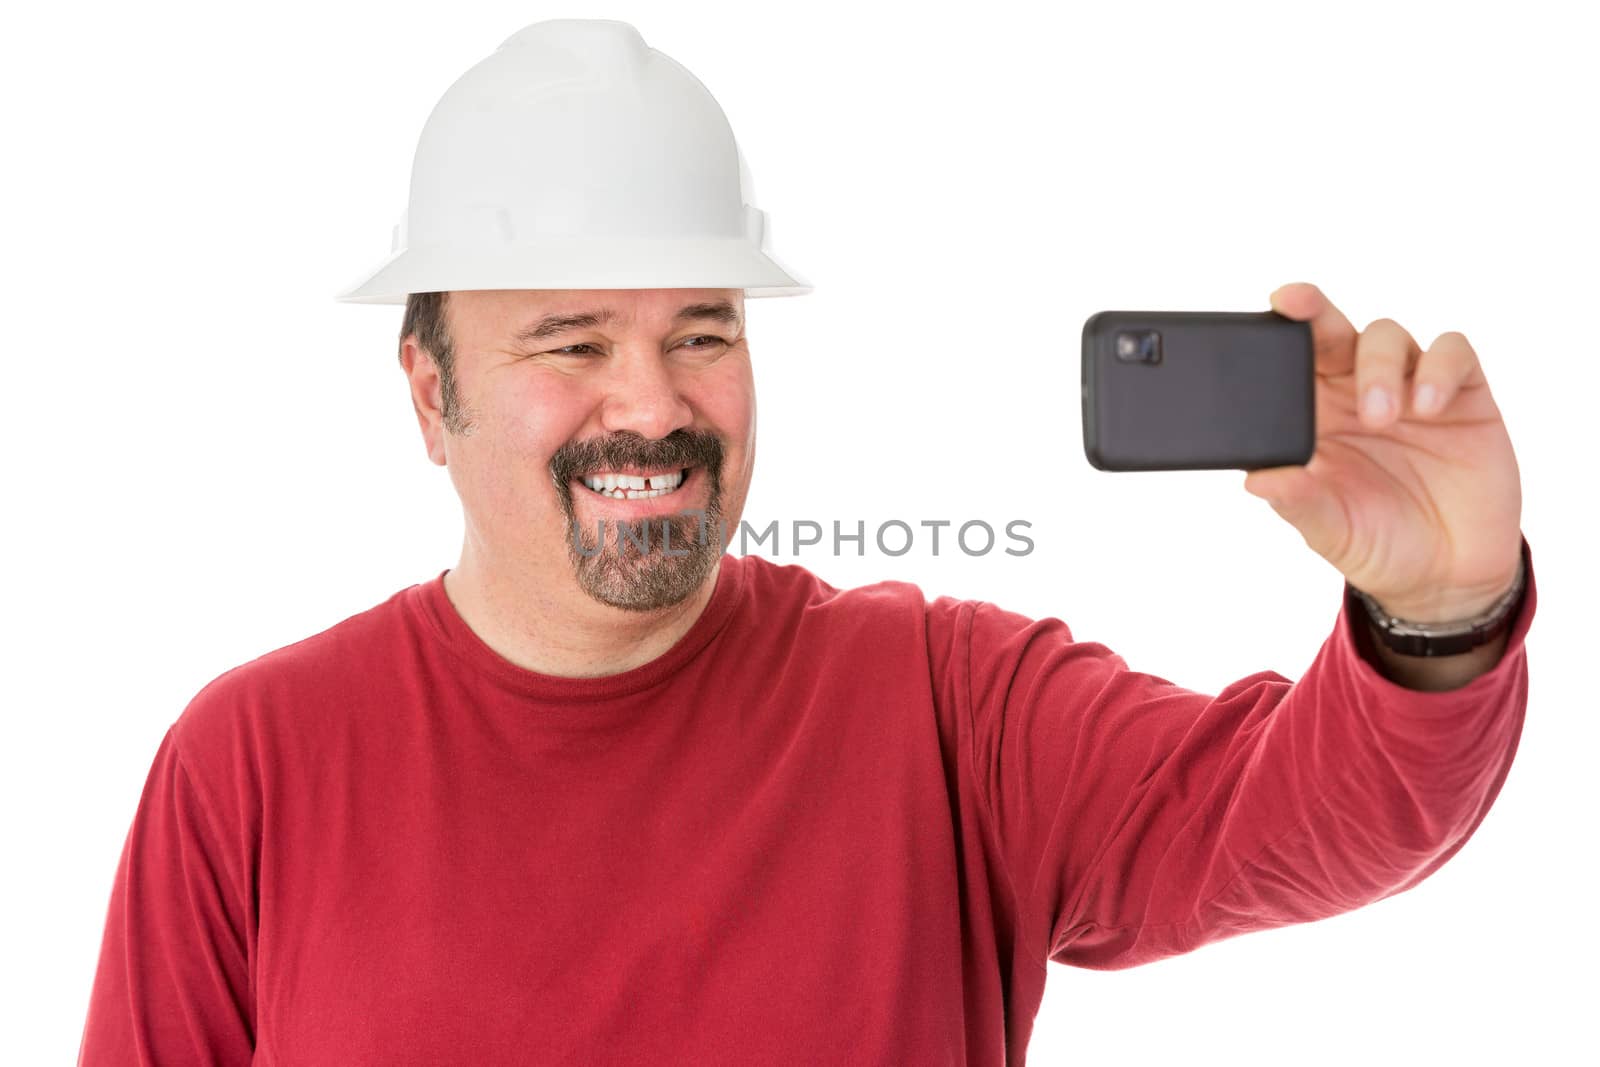 Workman posing for a self-portrait by coskun